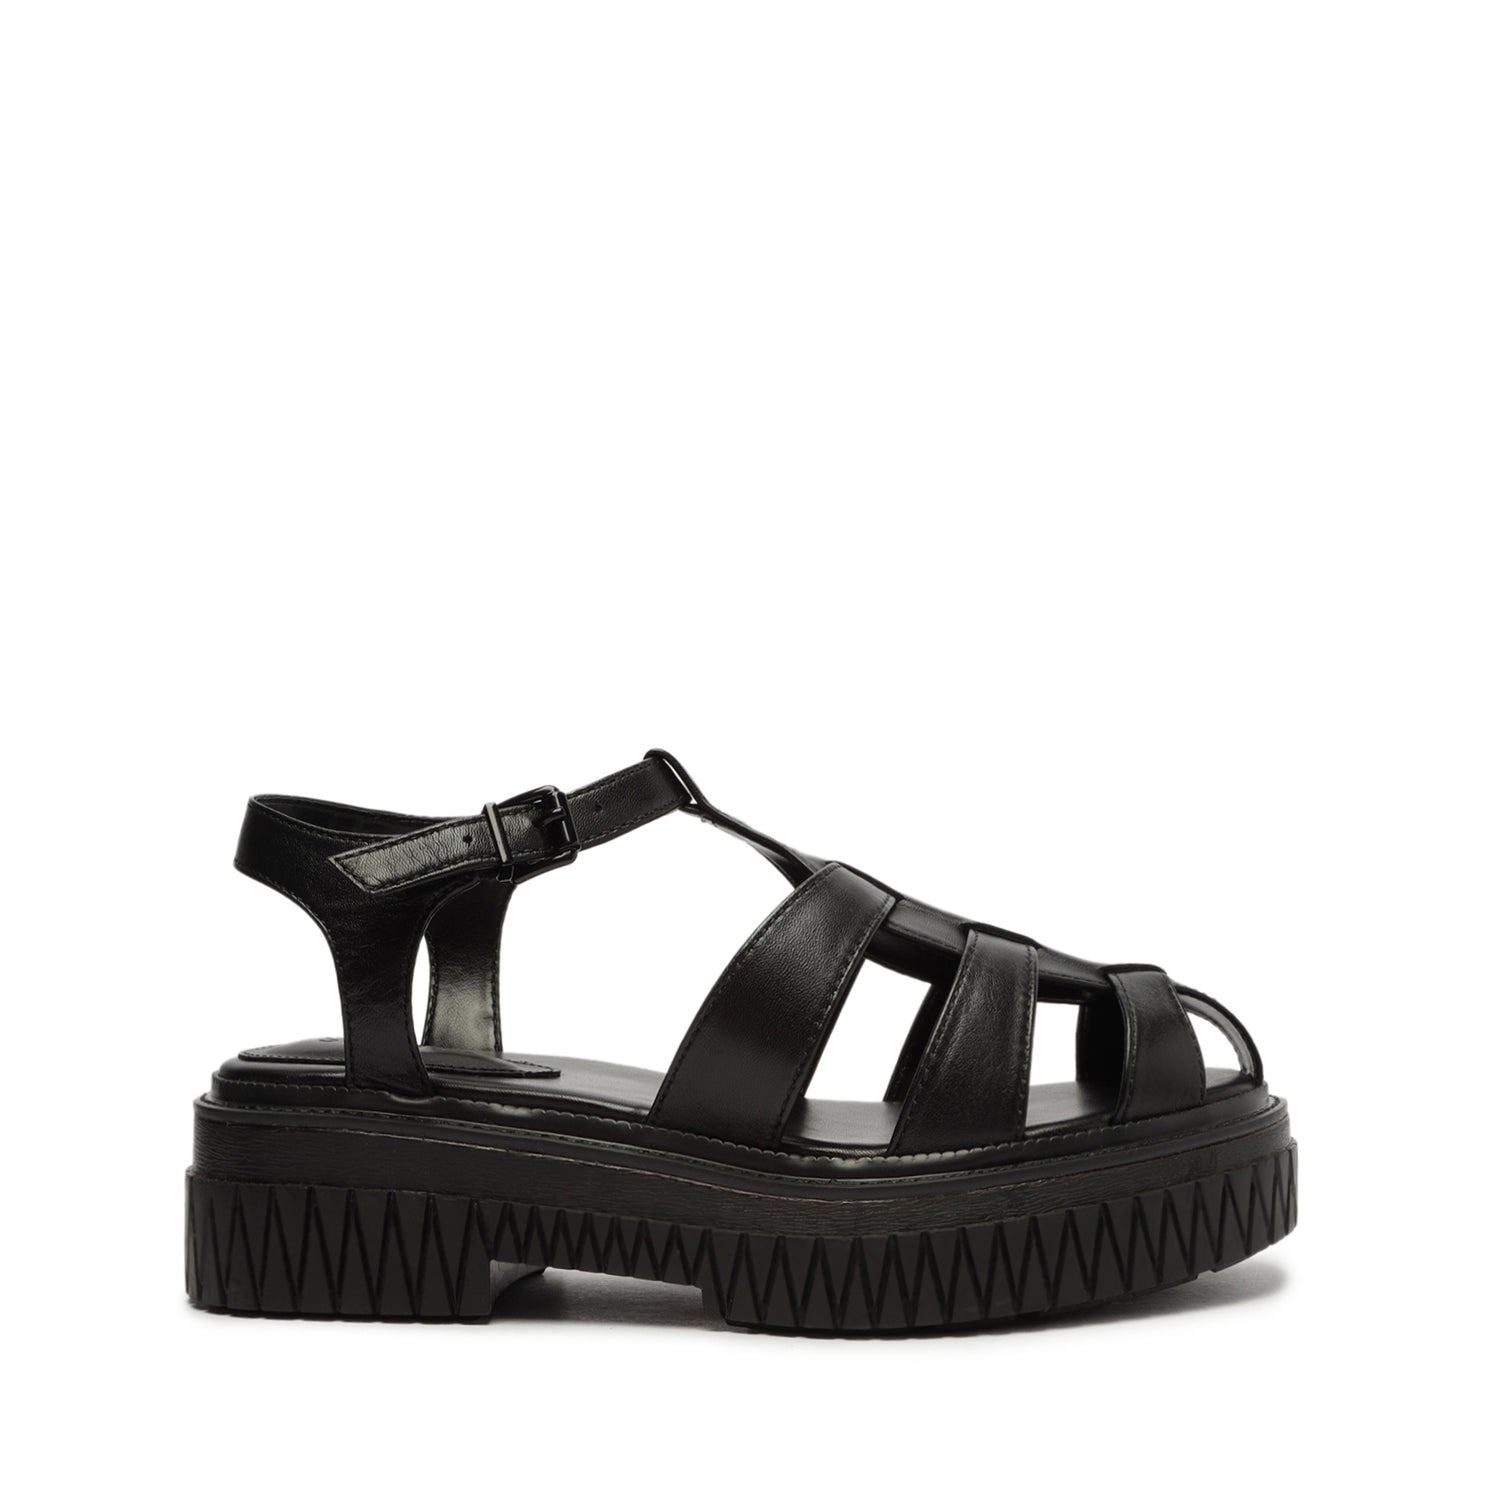 Beatrix Nappa Leather Sandal Sandals Sale 5 Black Nappa Leather - Schutz Shoes